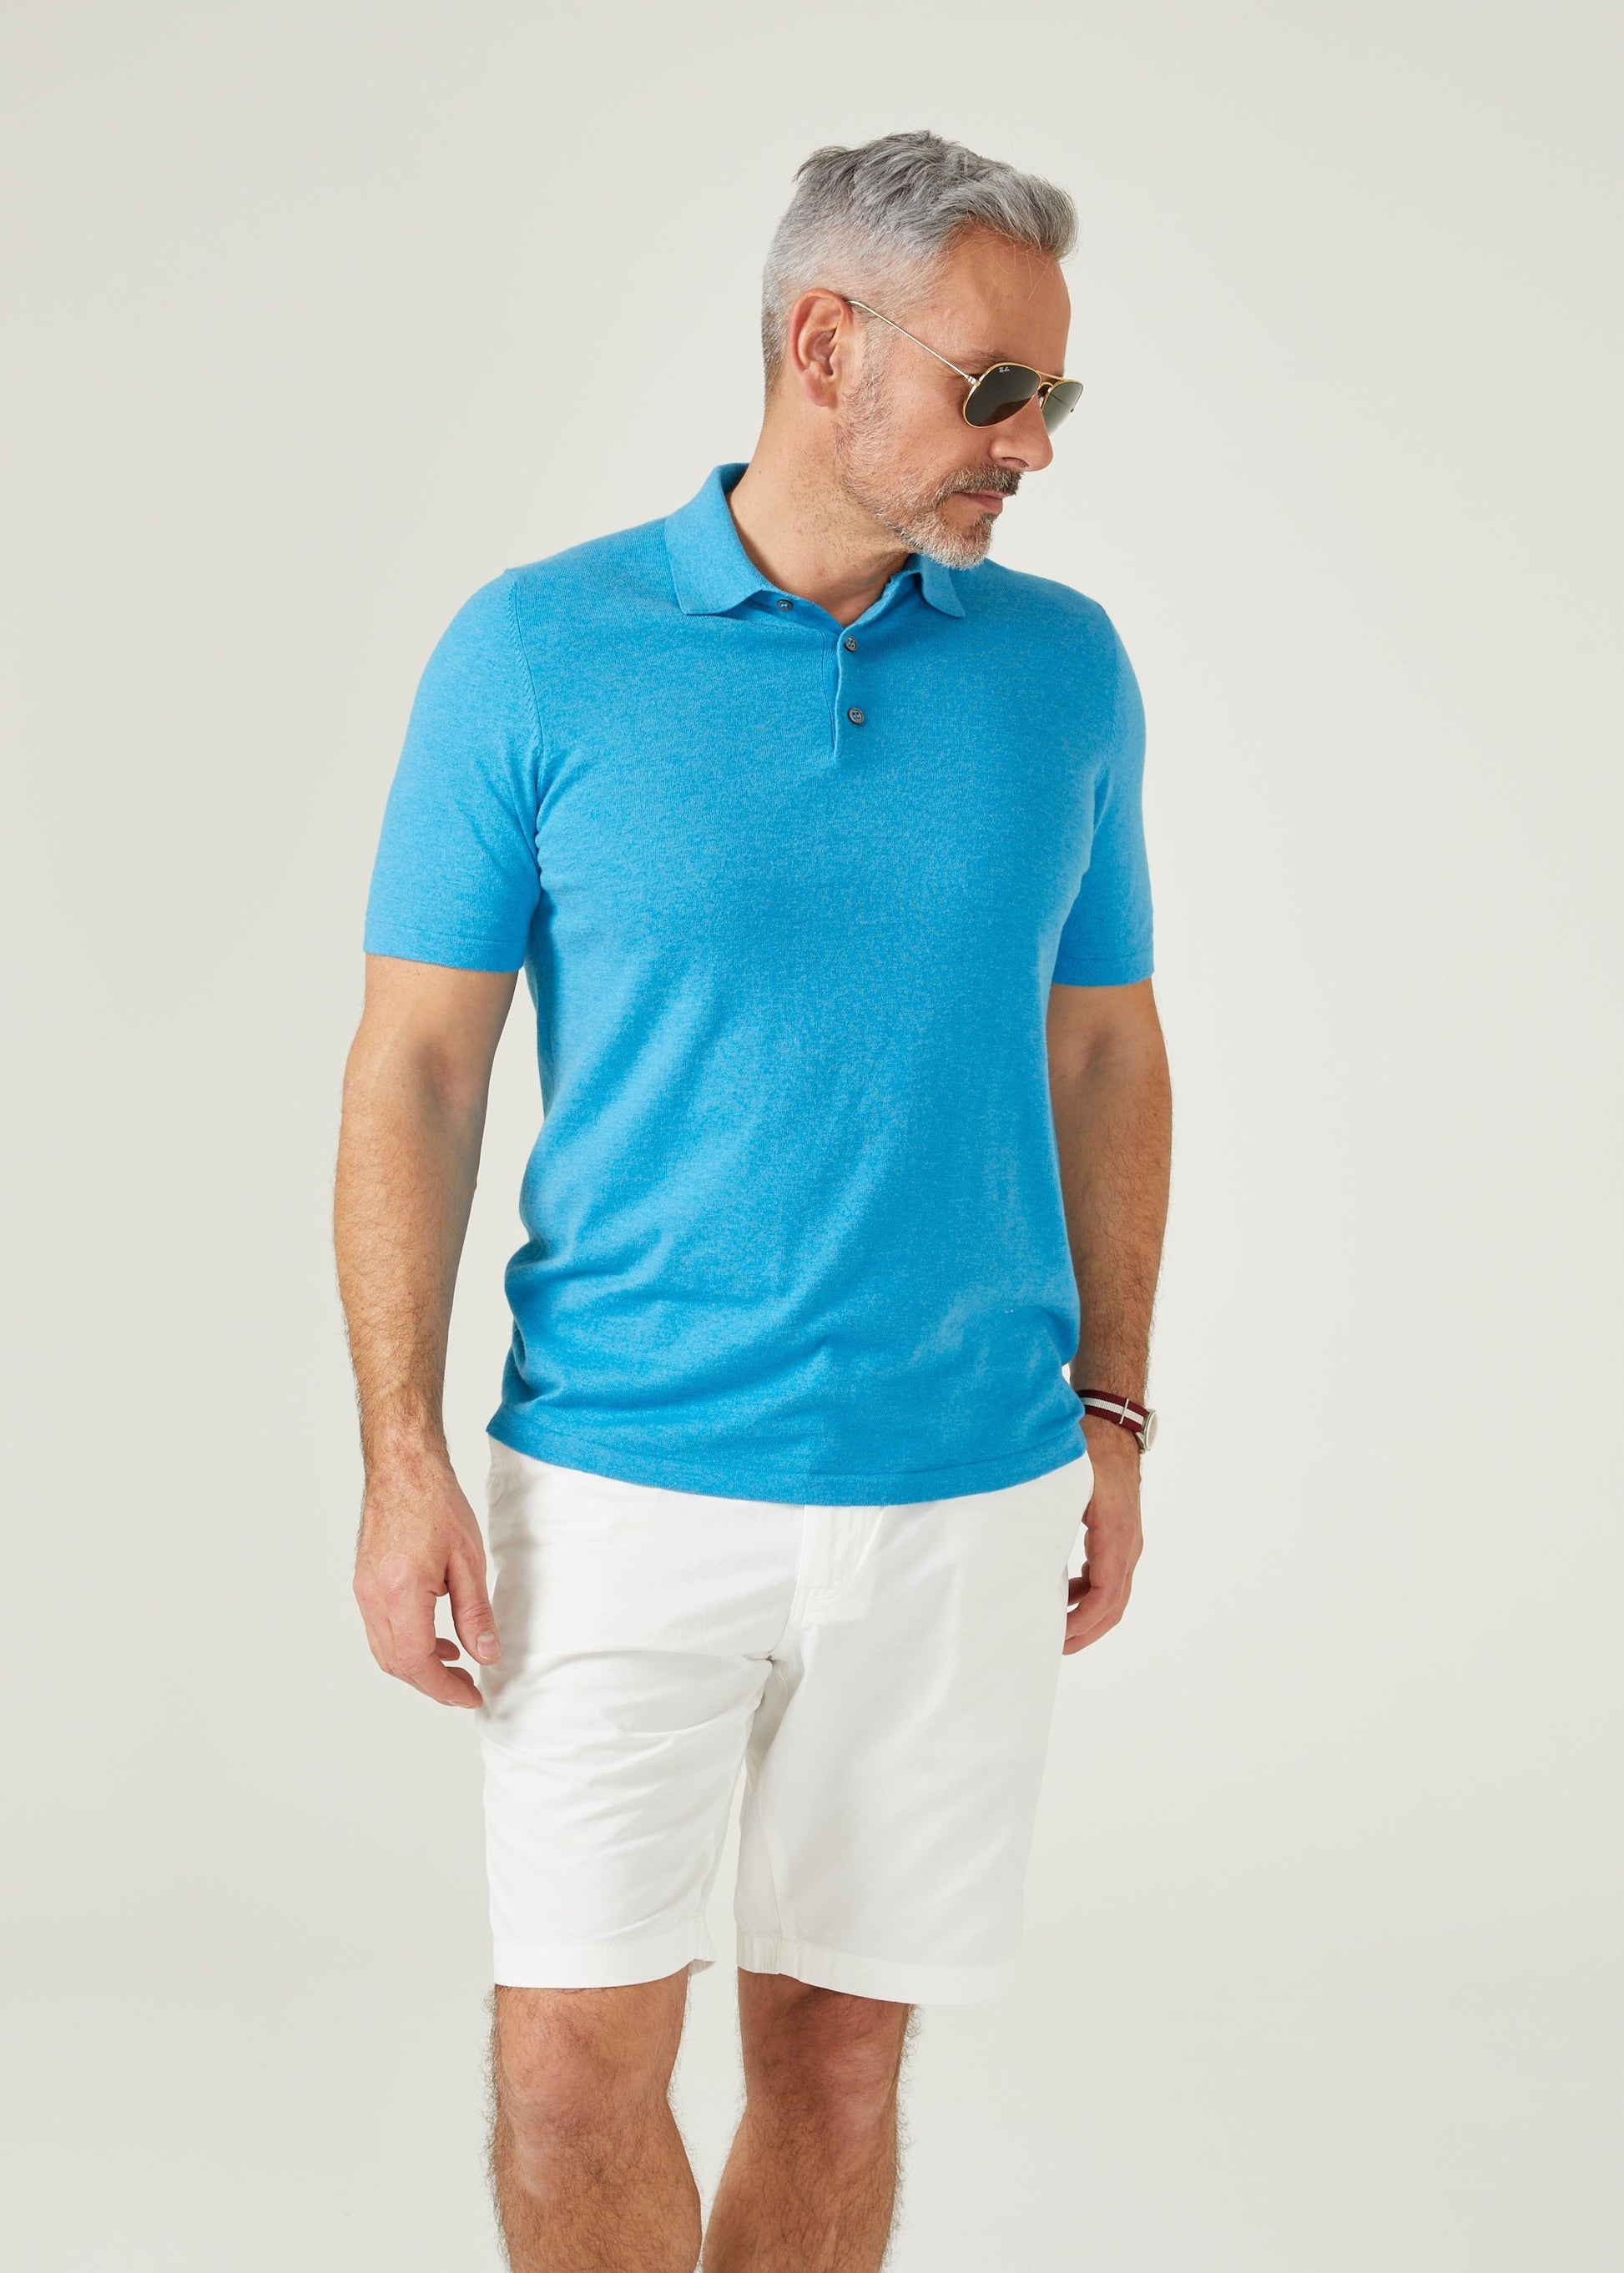 Men's luxury cotton short sleeve polo shirt in malibu